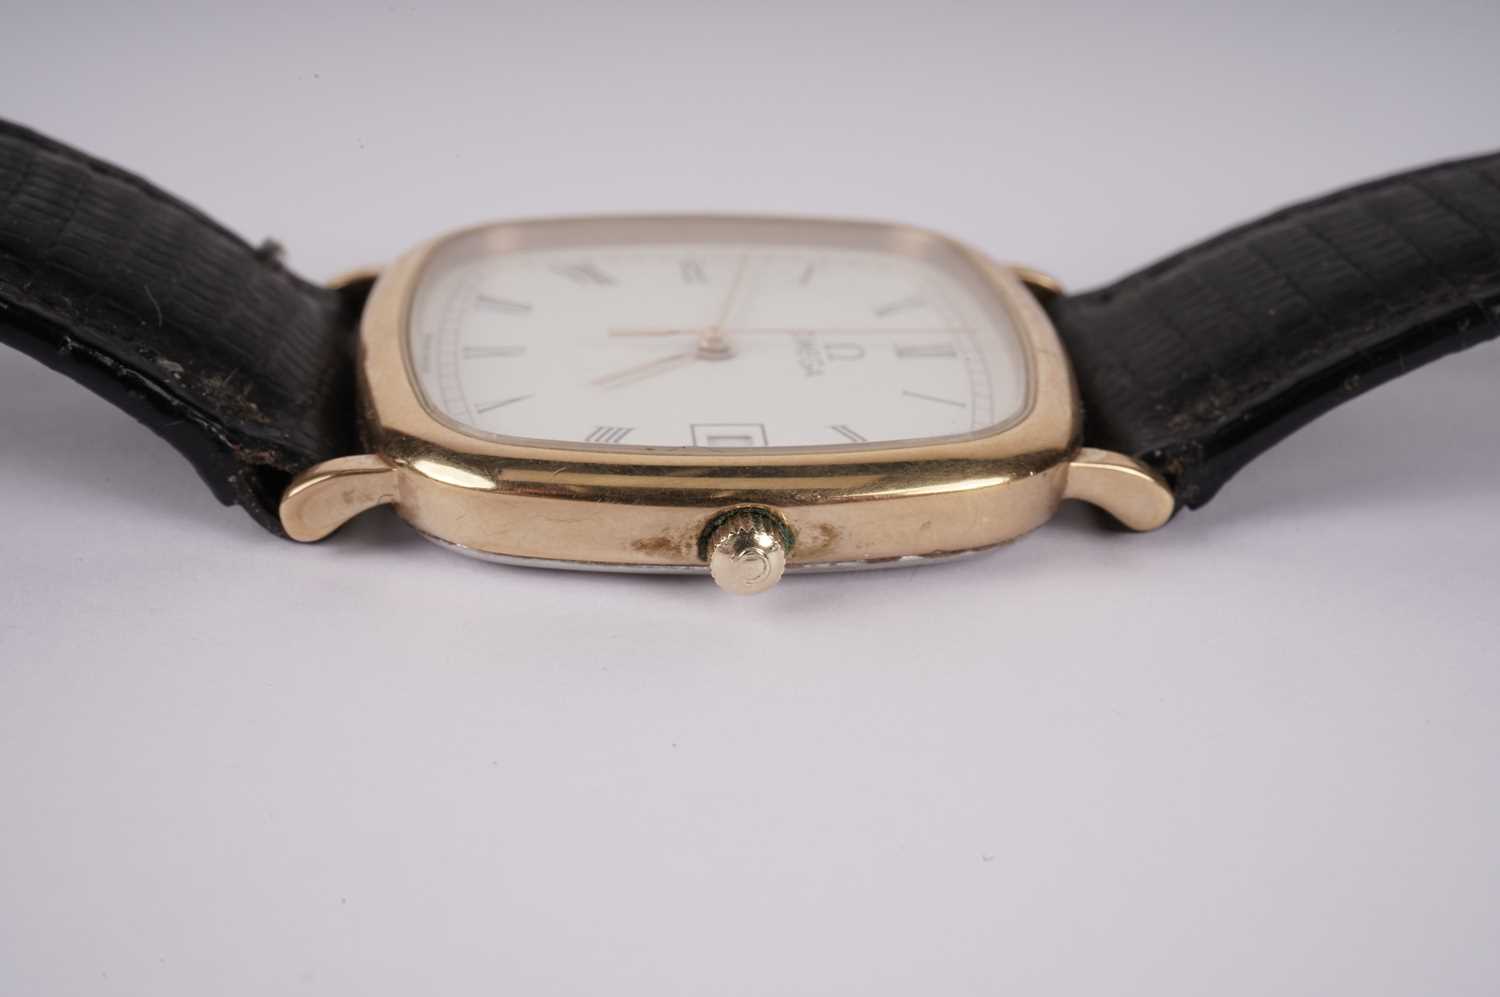 An Omega De Ville wristwatch - Image 3 of 4